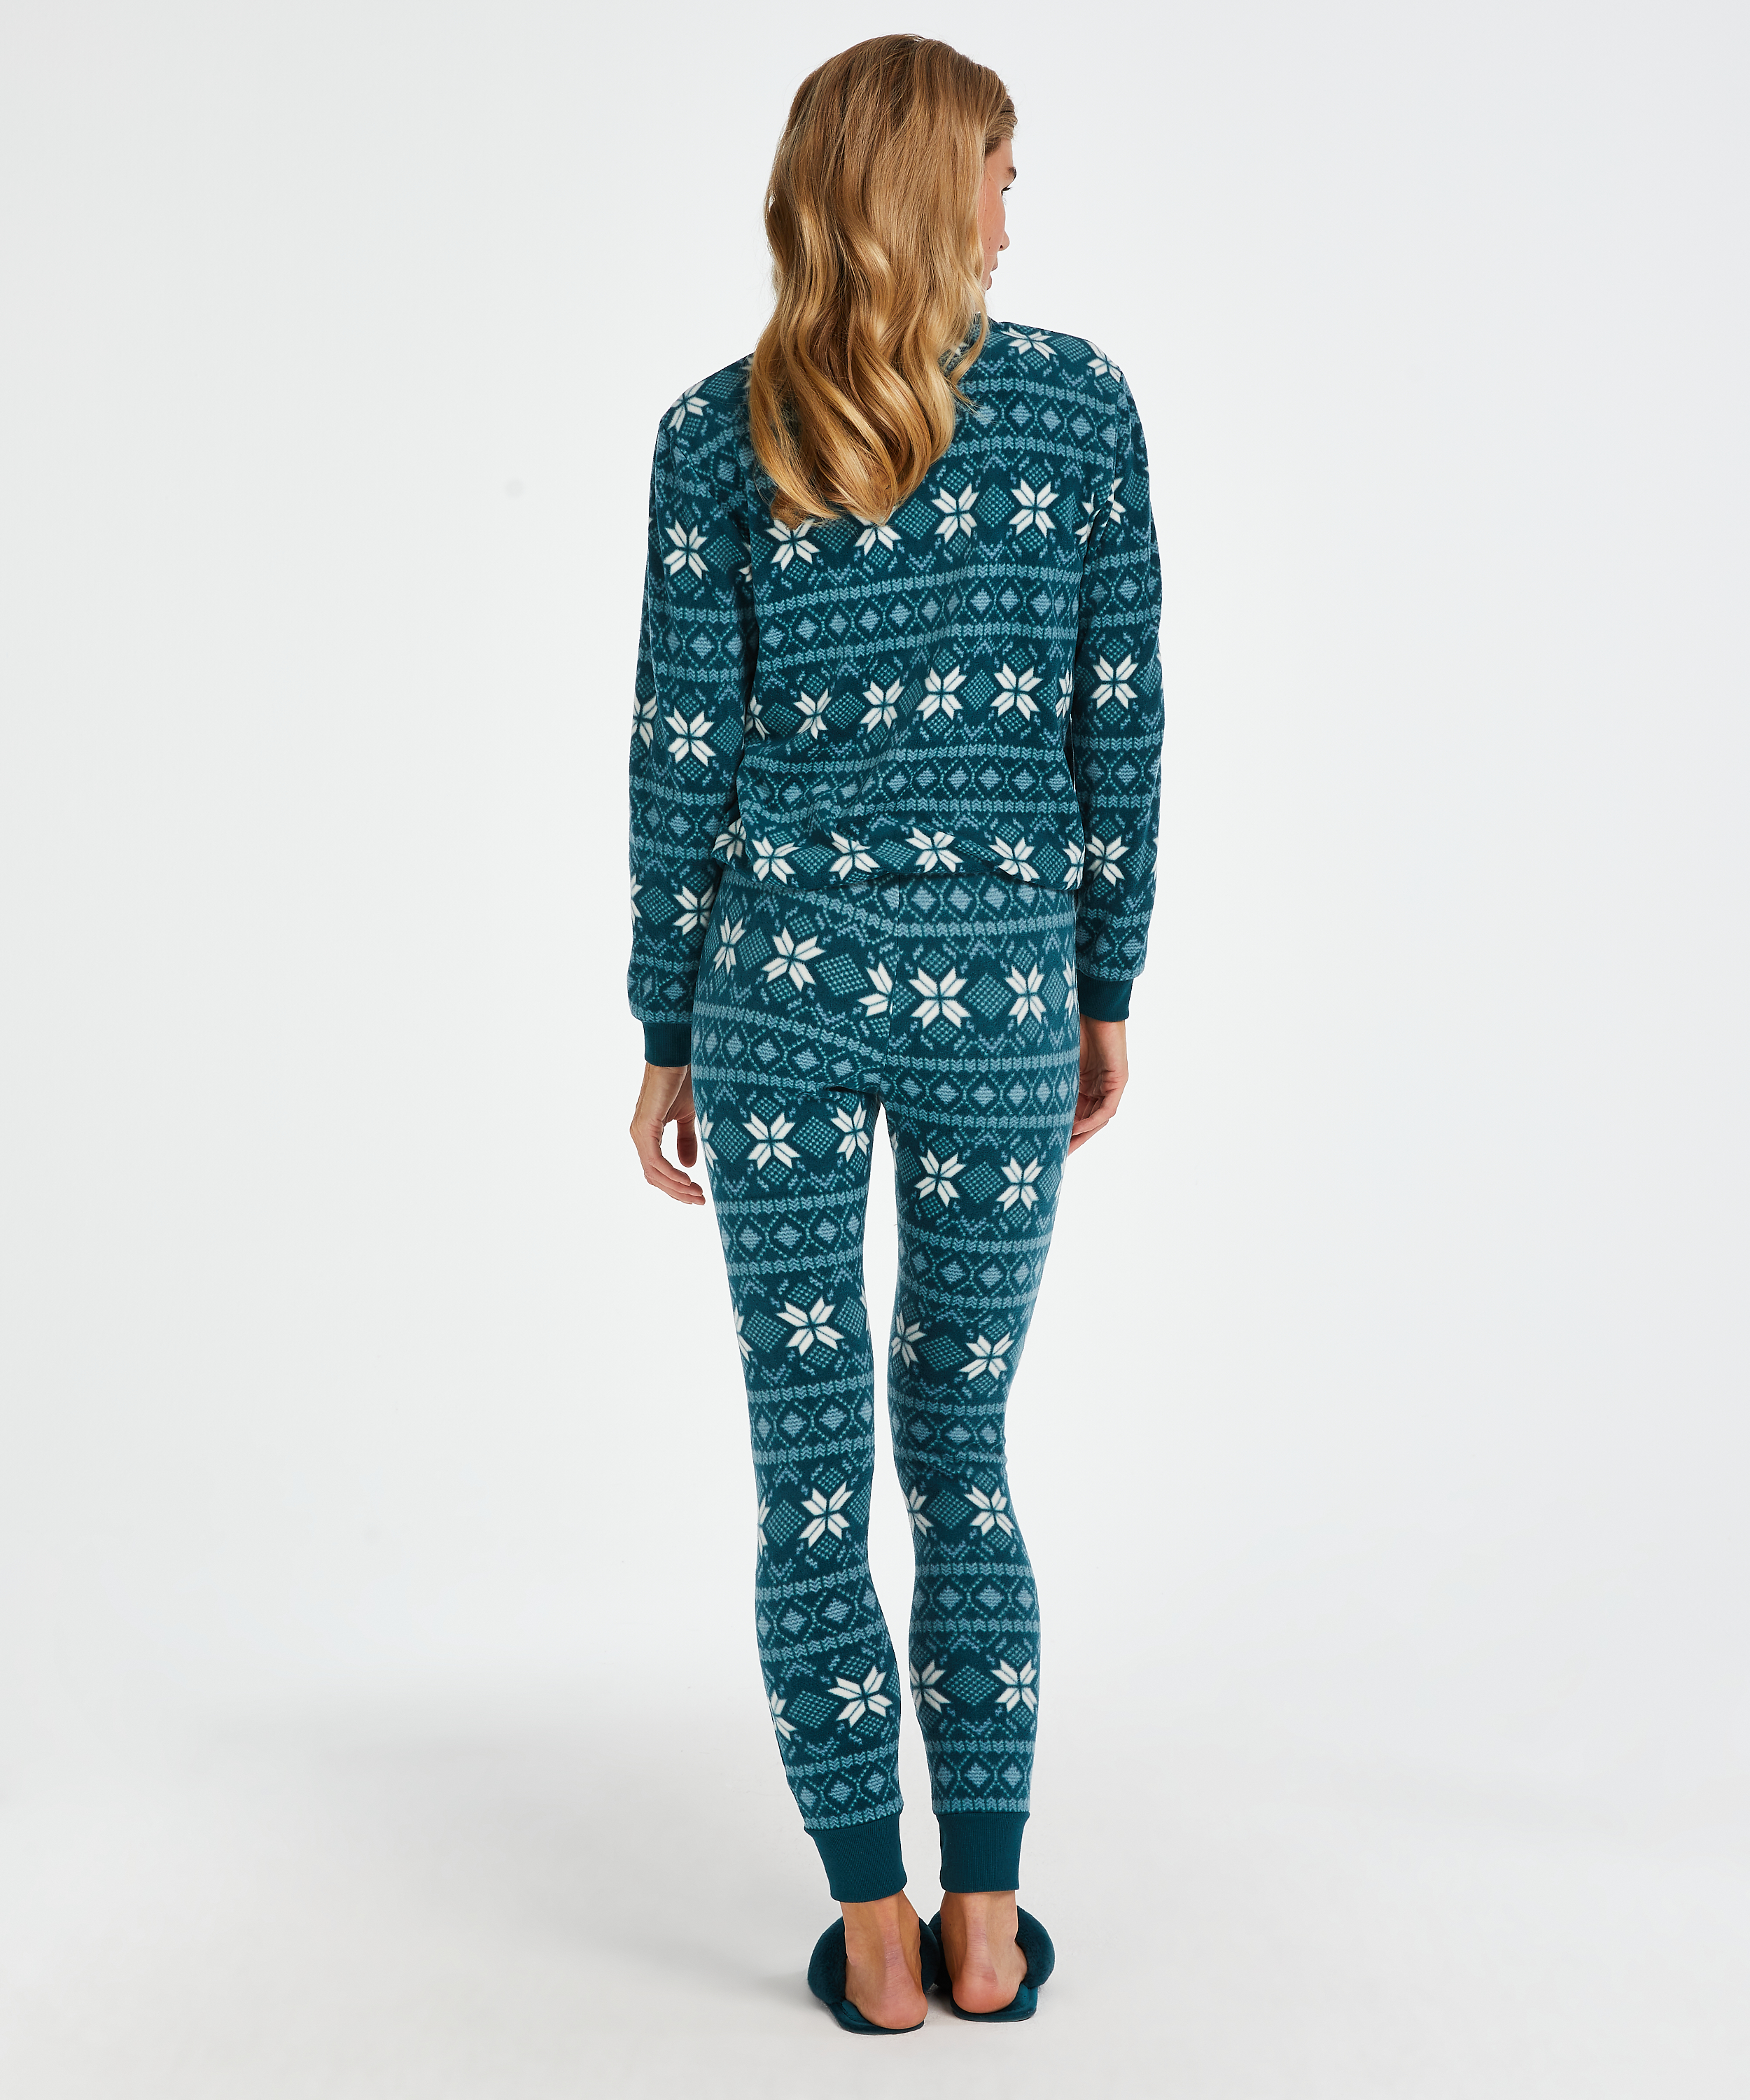 Orthodox West Nodig hebben Fleece Pyjama Set for €34.99 - Pajamas - Hunkemöller